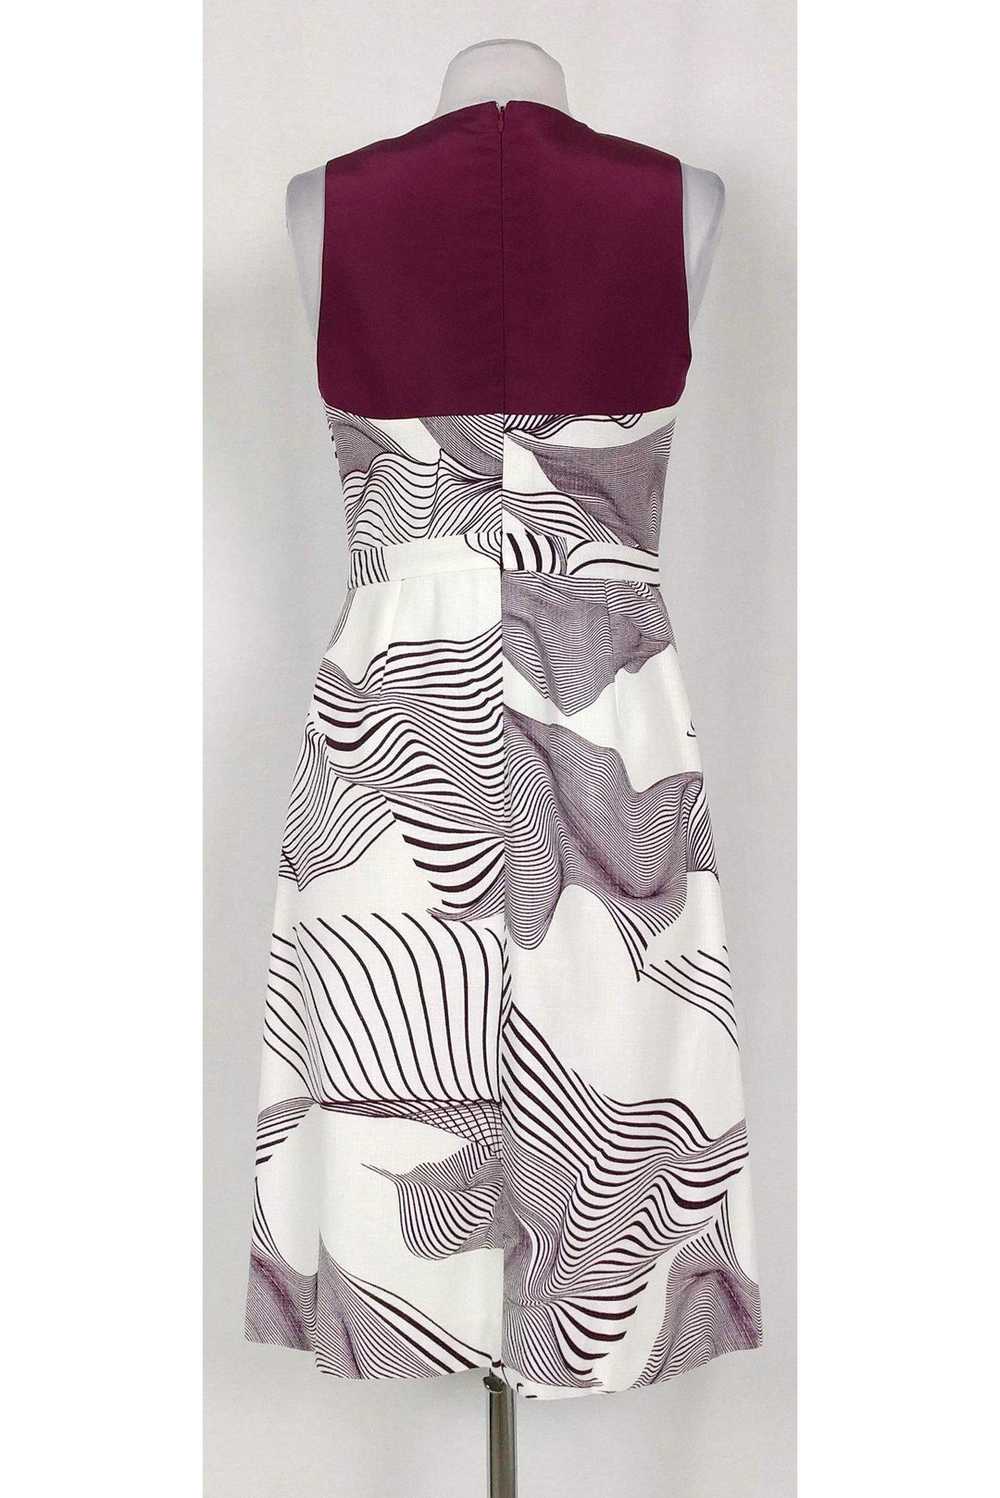 Carolina Herrera - White & Purple Printed Dress S… - image 3